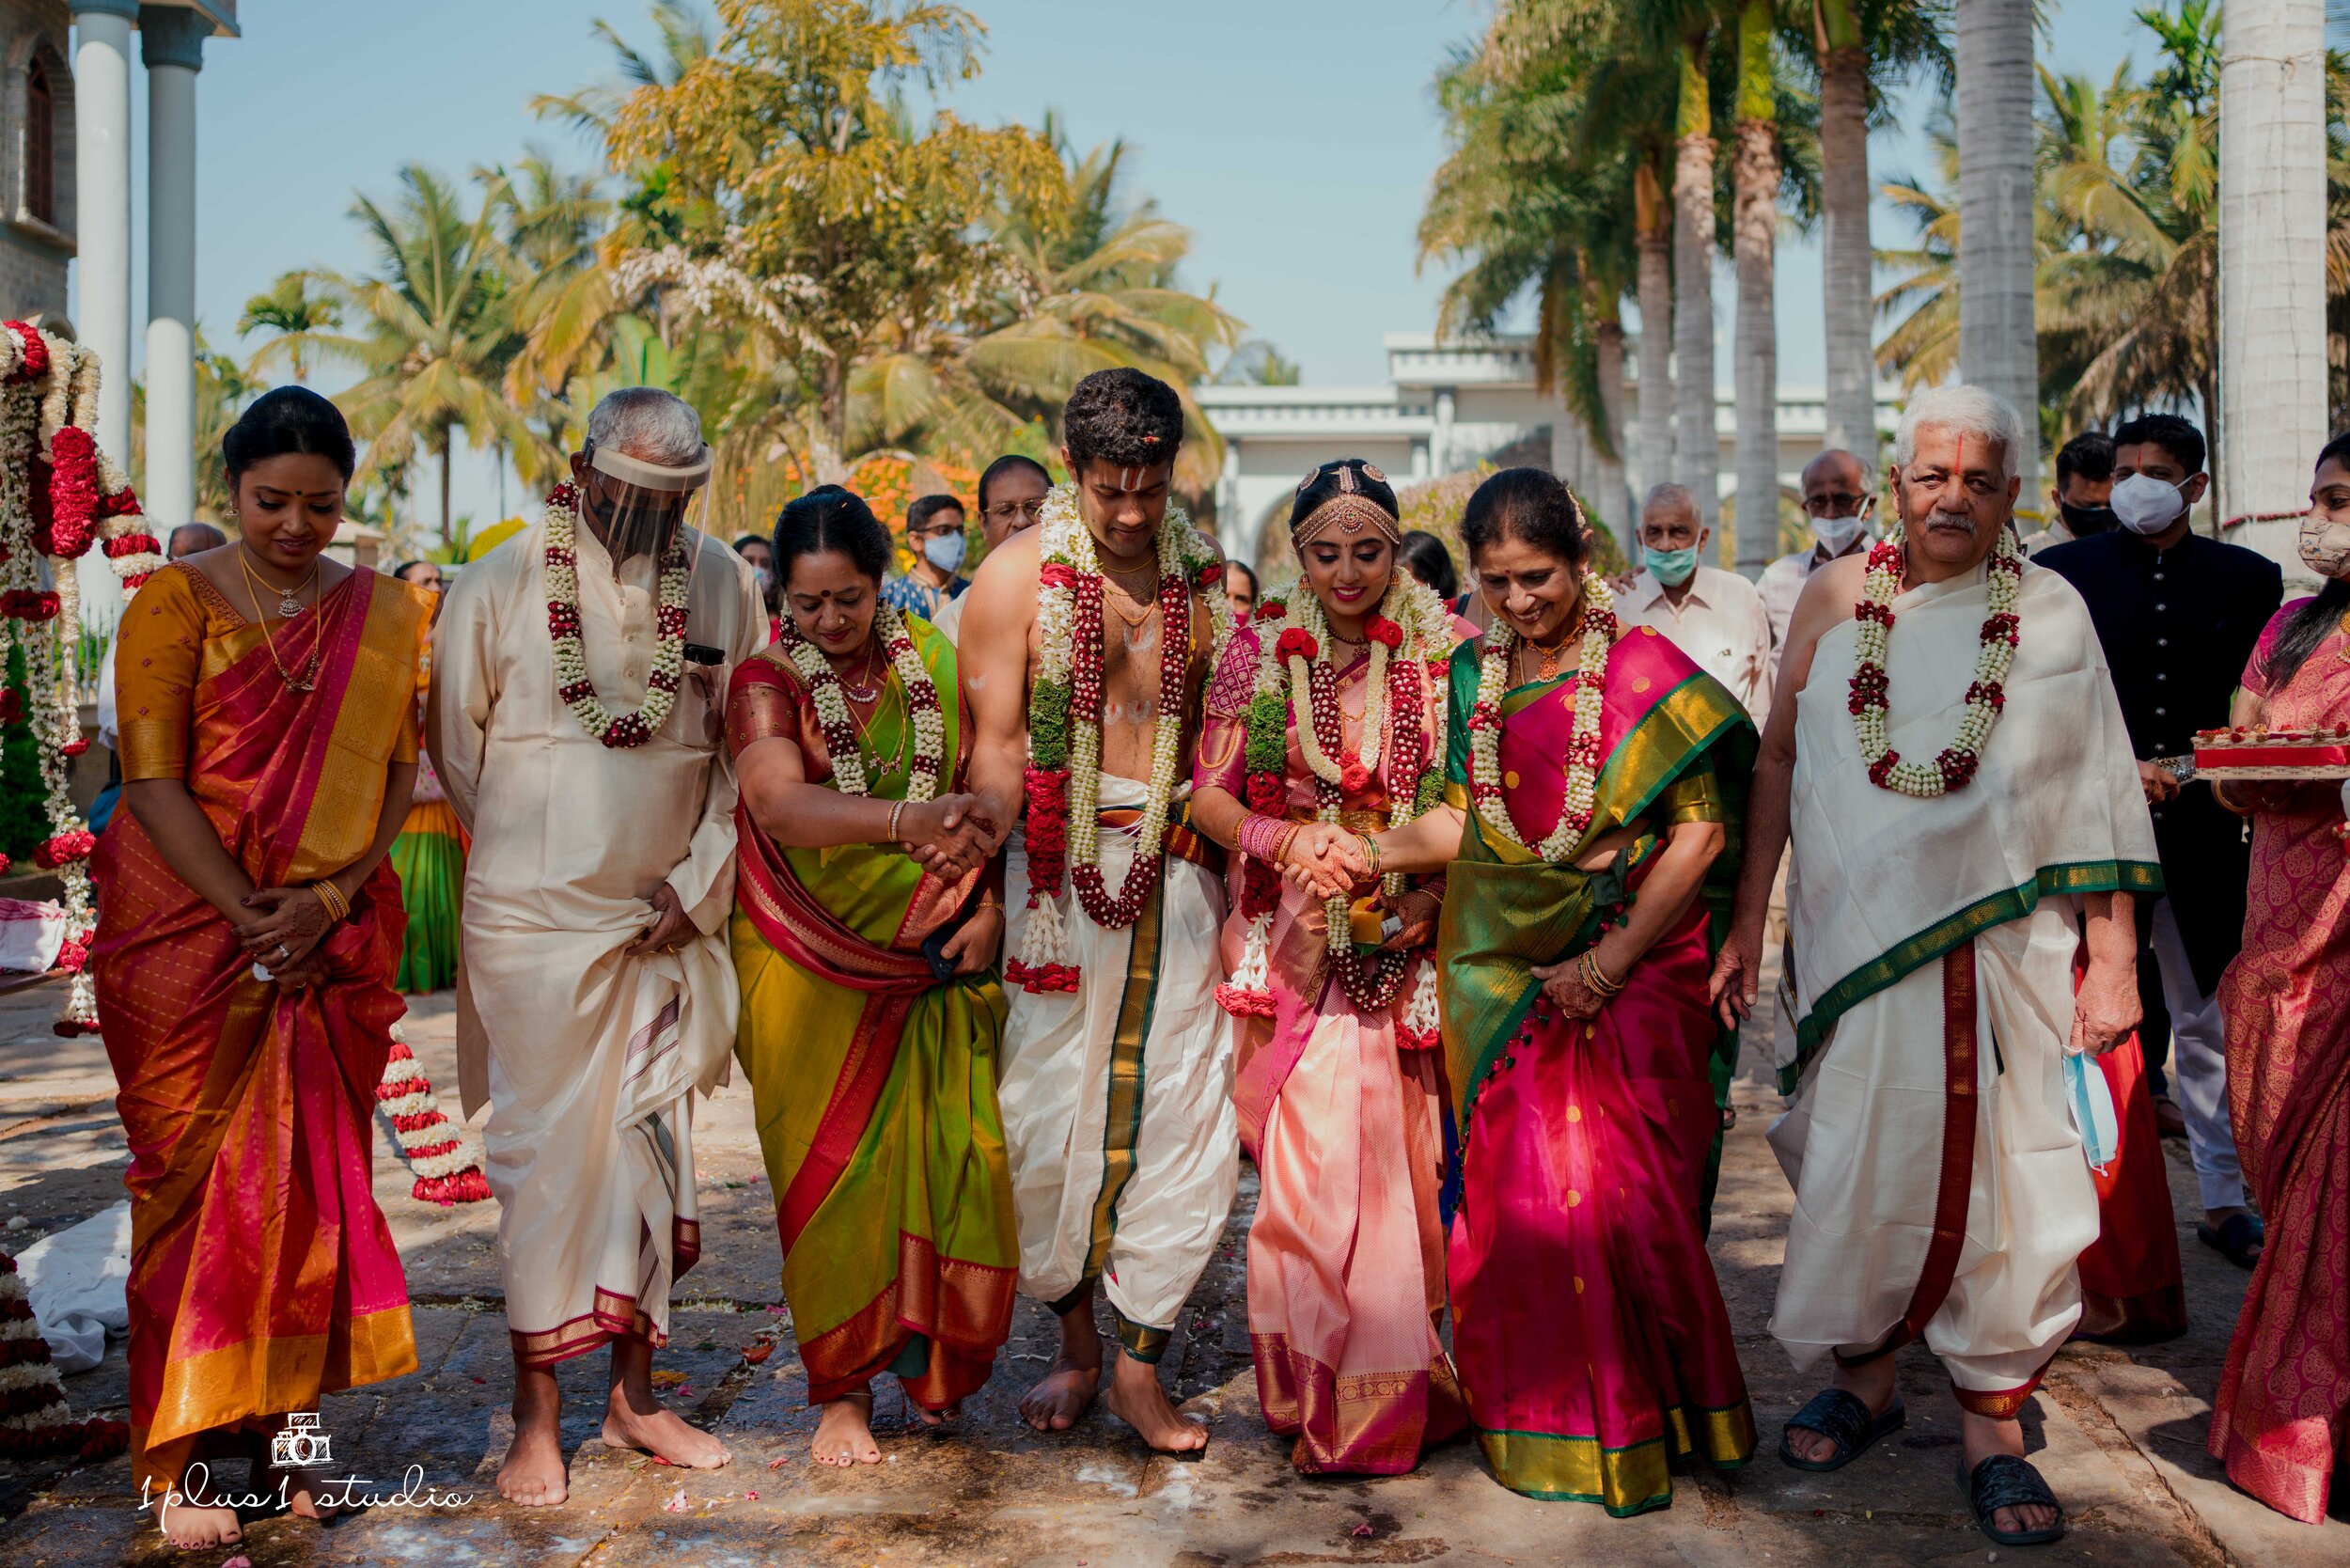 An Intimate Iyengar Tamil Brahmin Wedding With All Rituals At A Farm